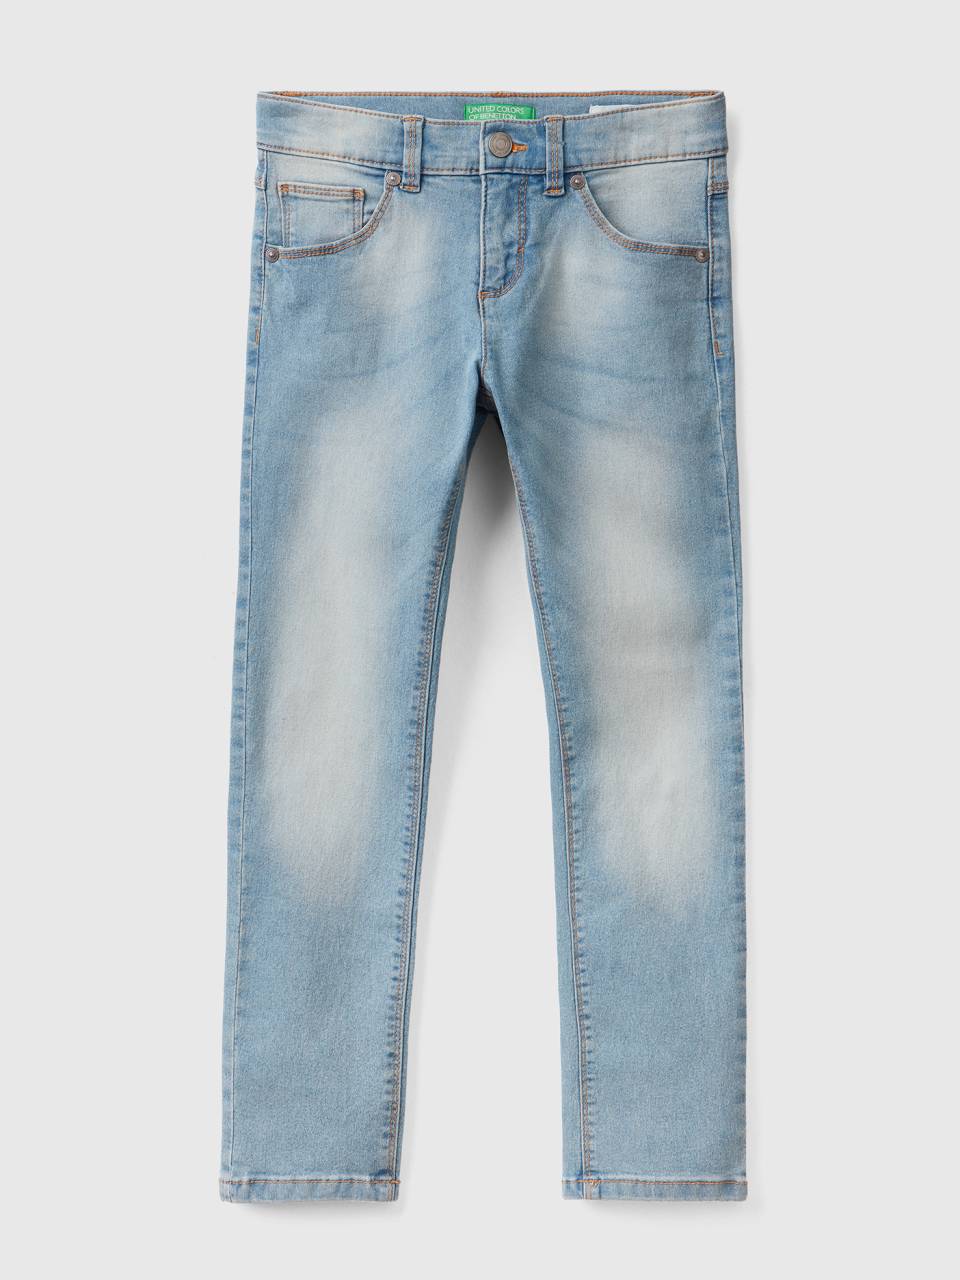 Benetton five-pocket slim fit jeans. 1